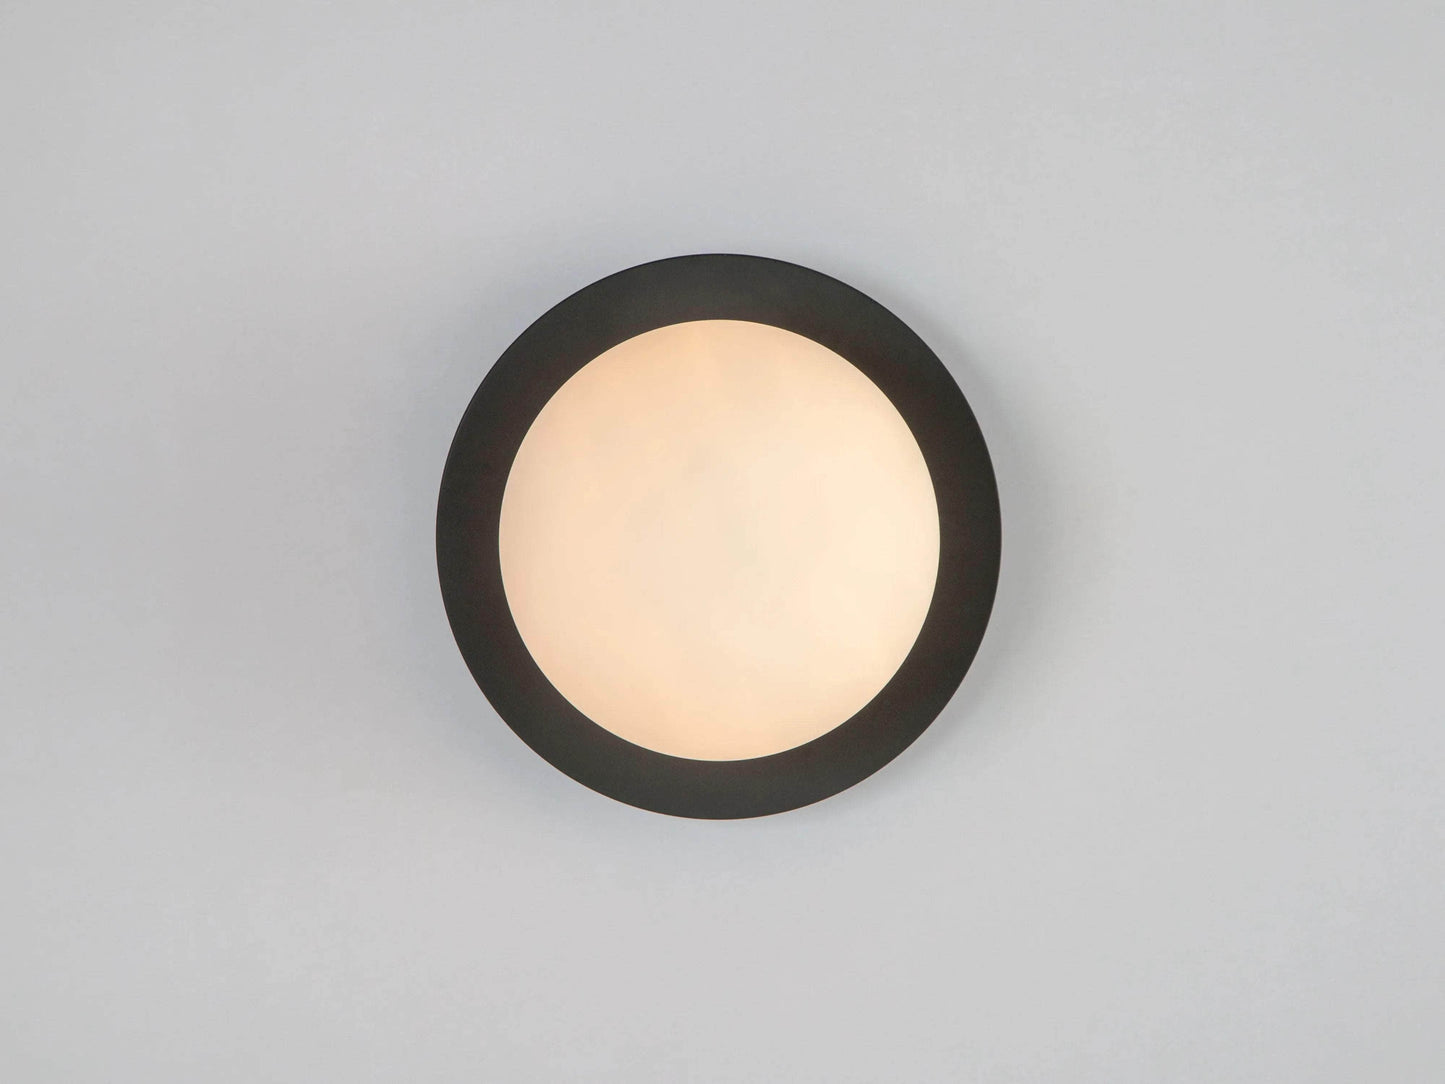 Charcoal grey opal disk wall light